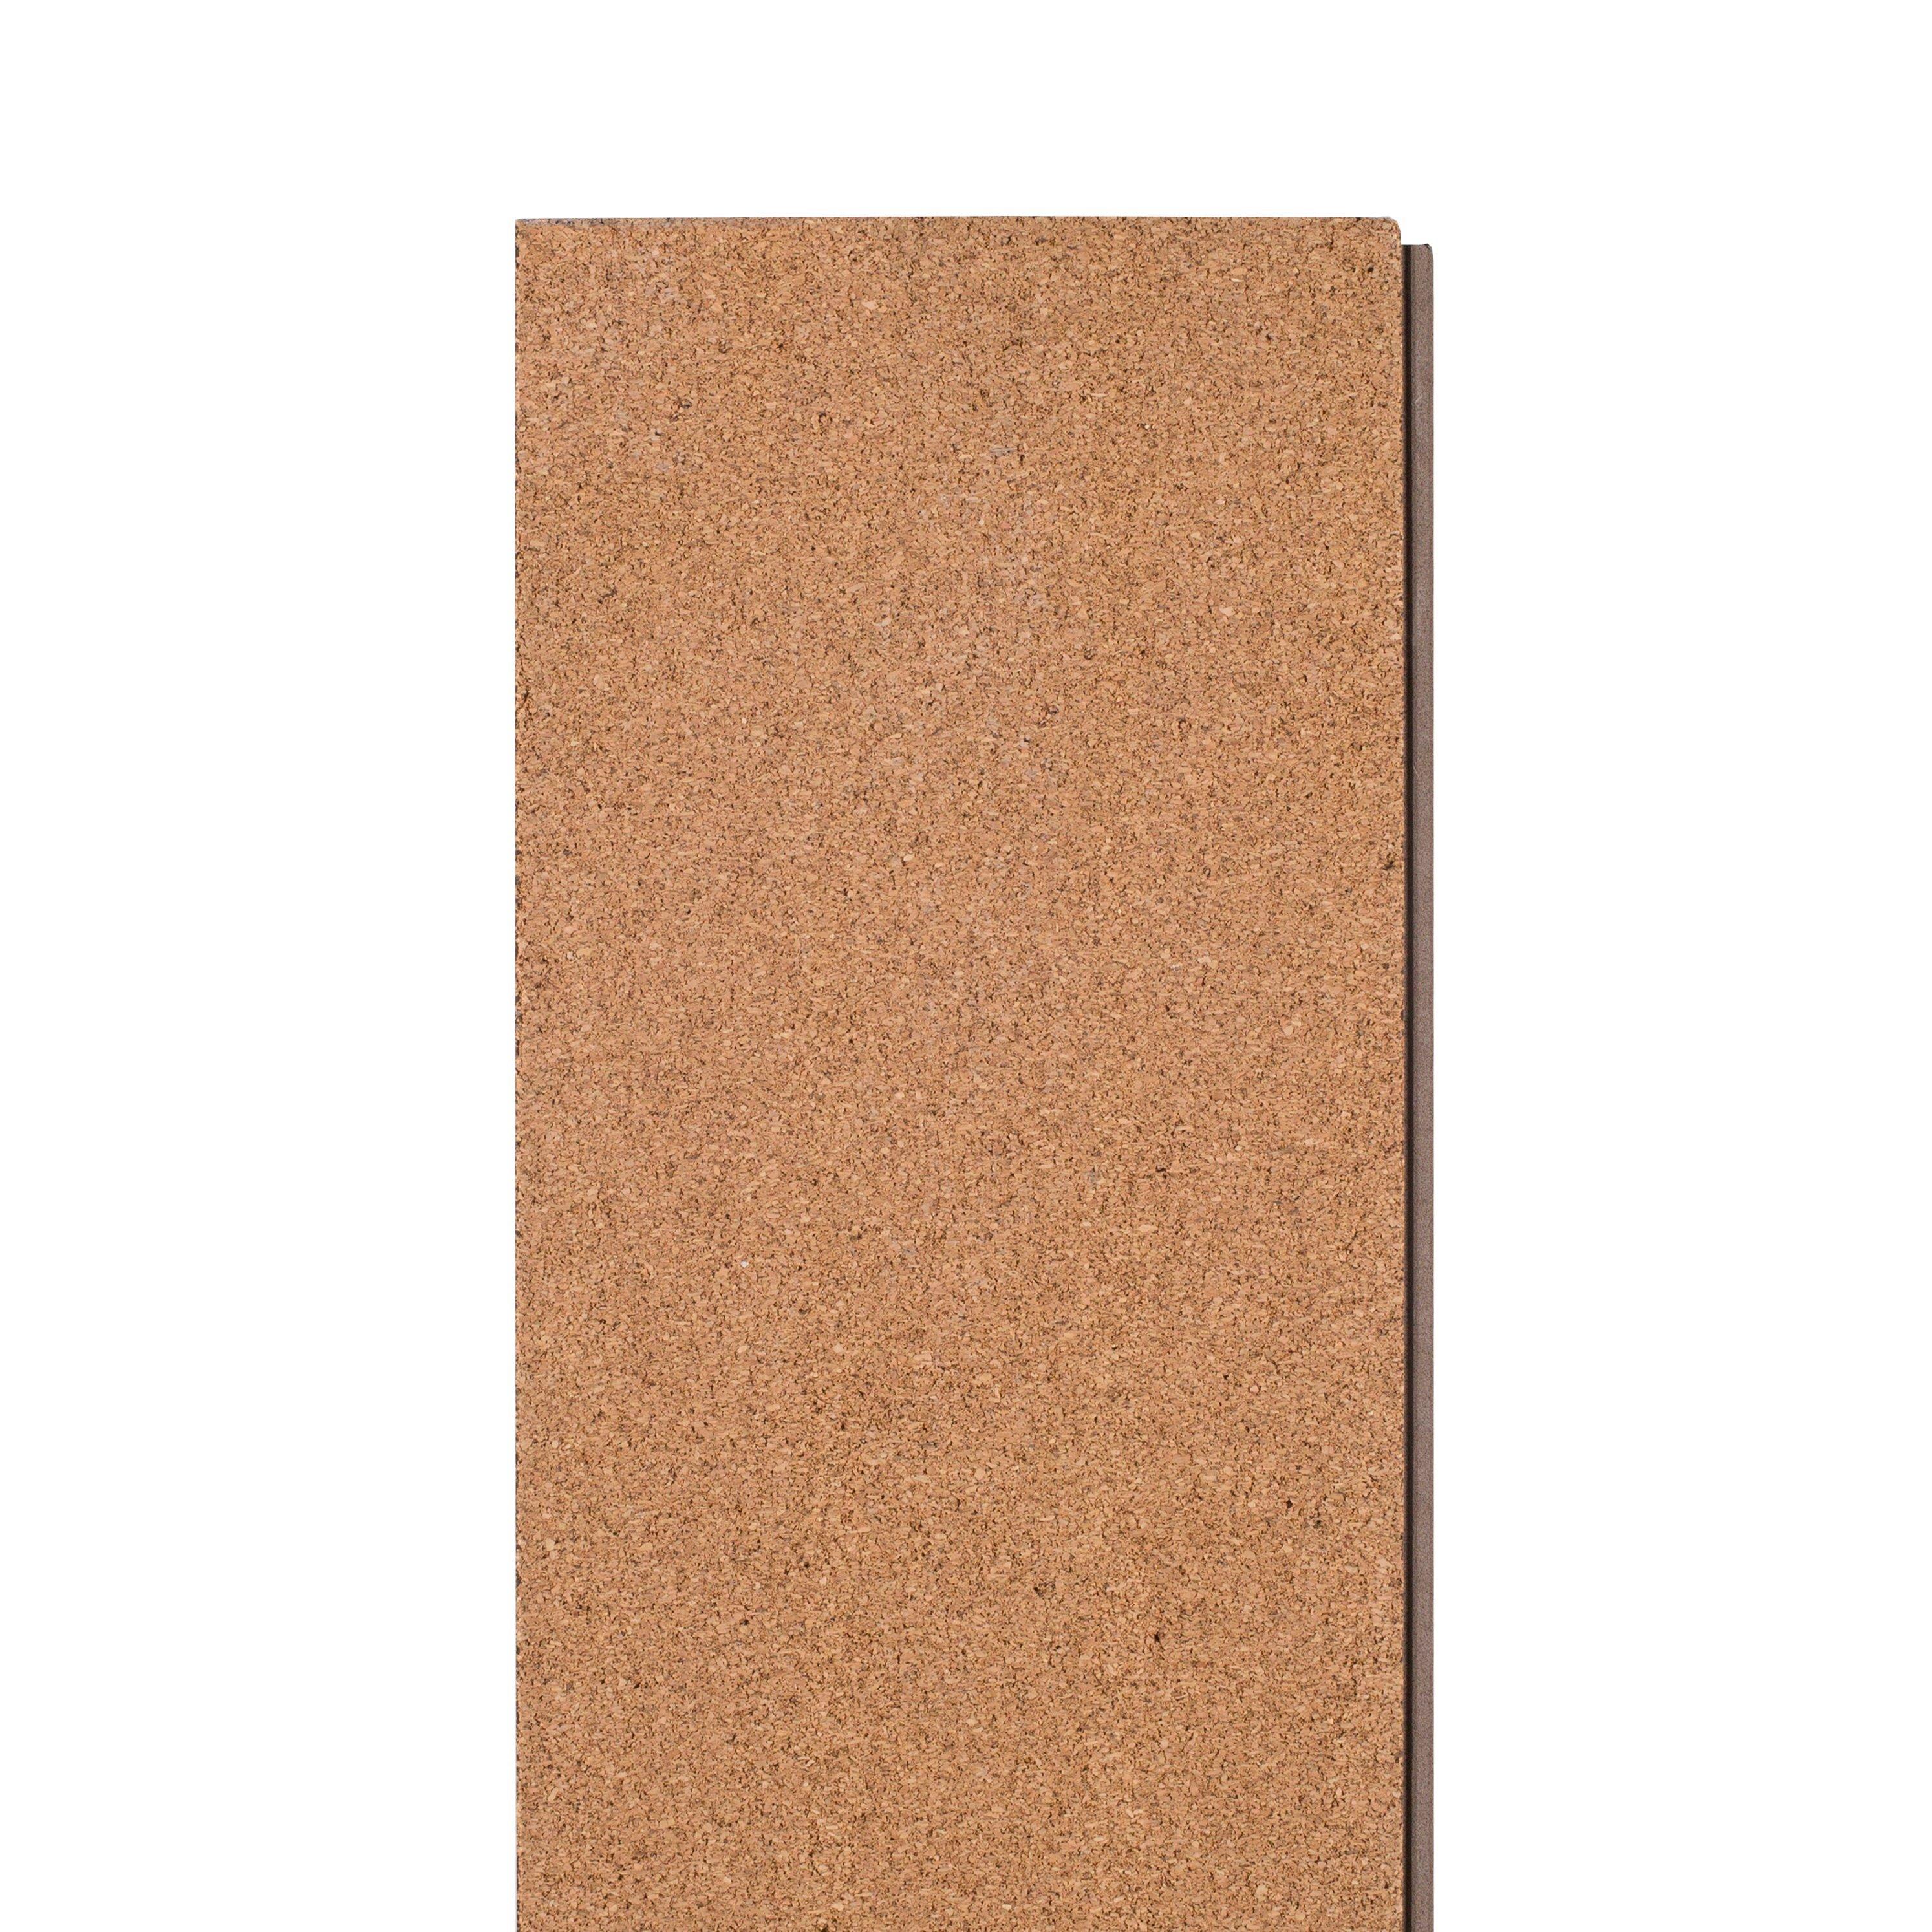 Ombre Gray Rigid Core Luxury Vinyl Plank - Cork Back